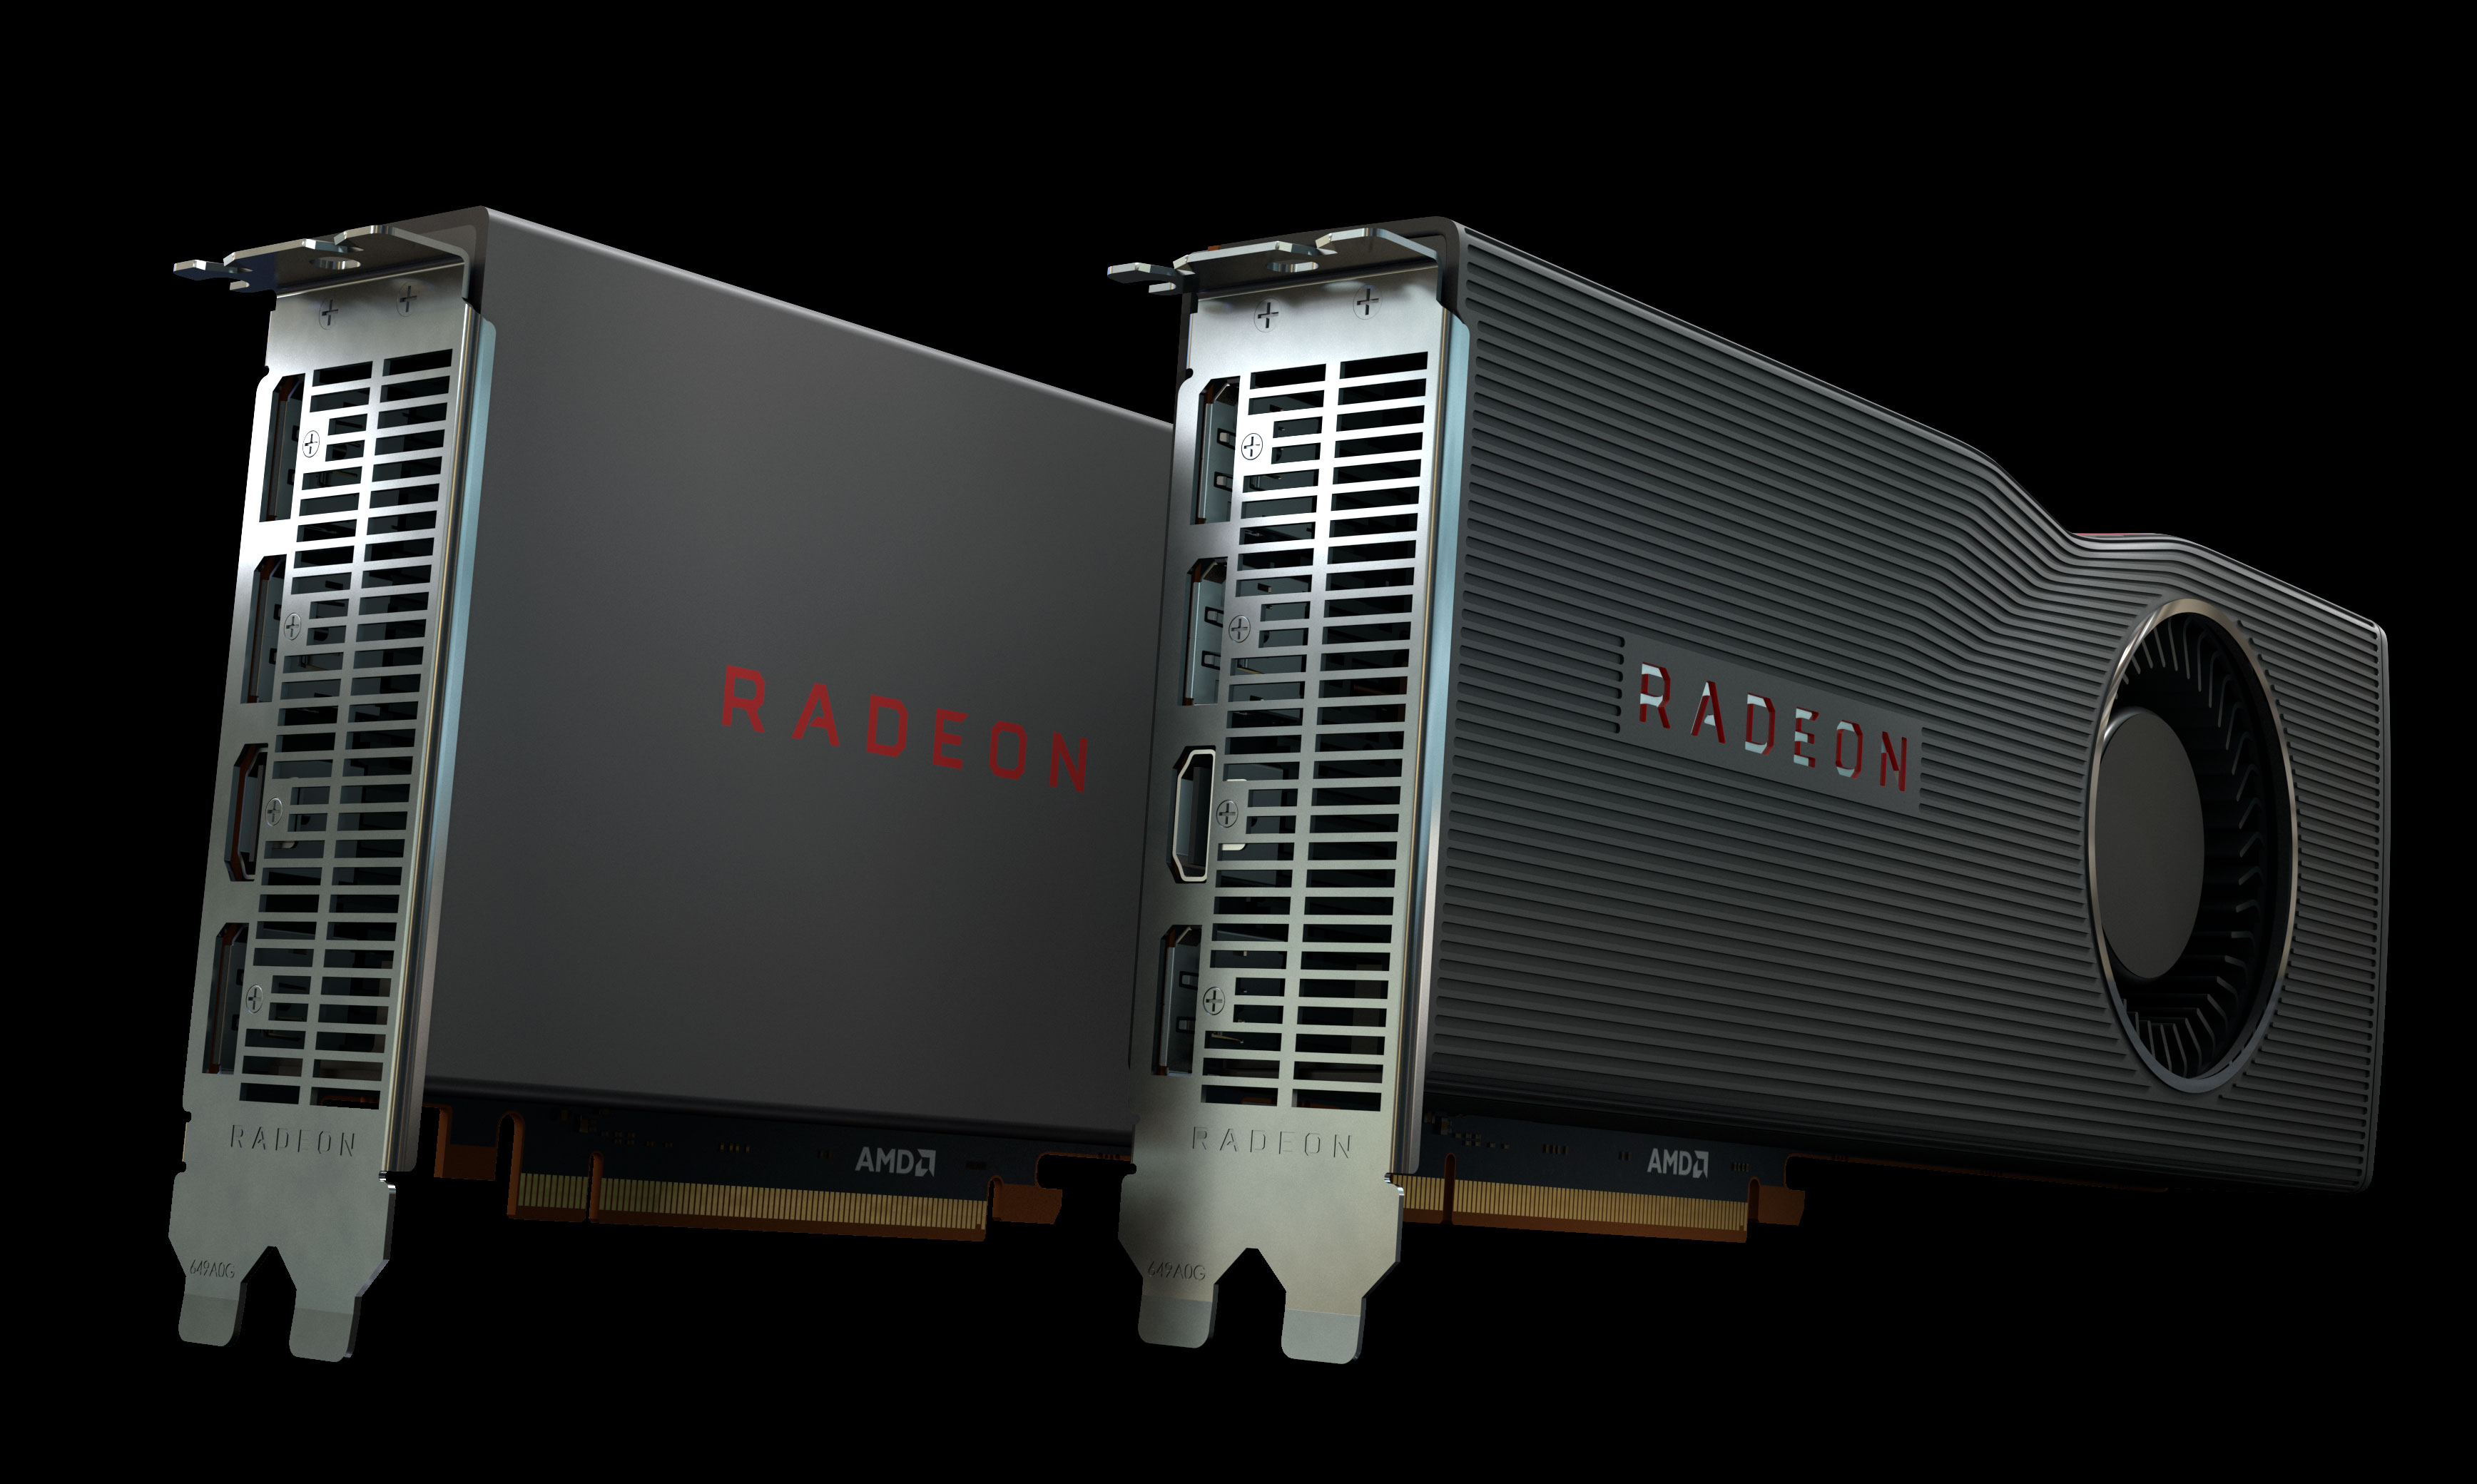 Radeon RX 5600 XT Joins Radeon RX 5700 